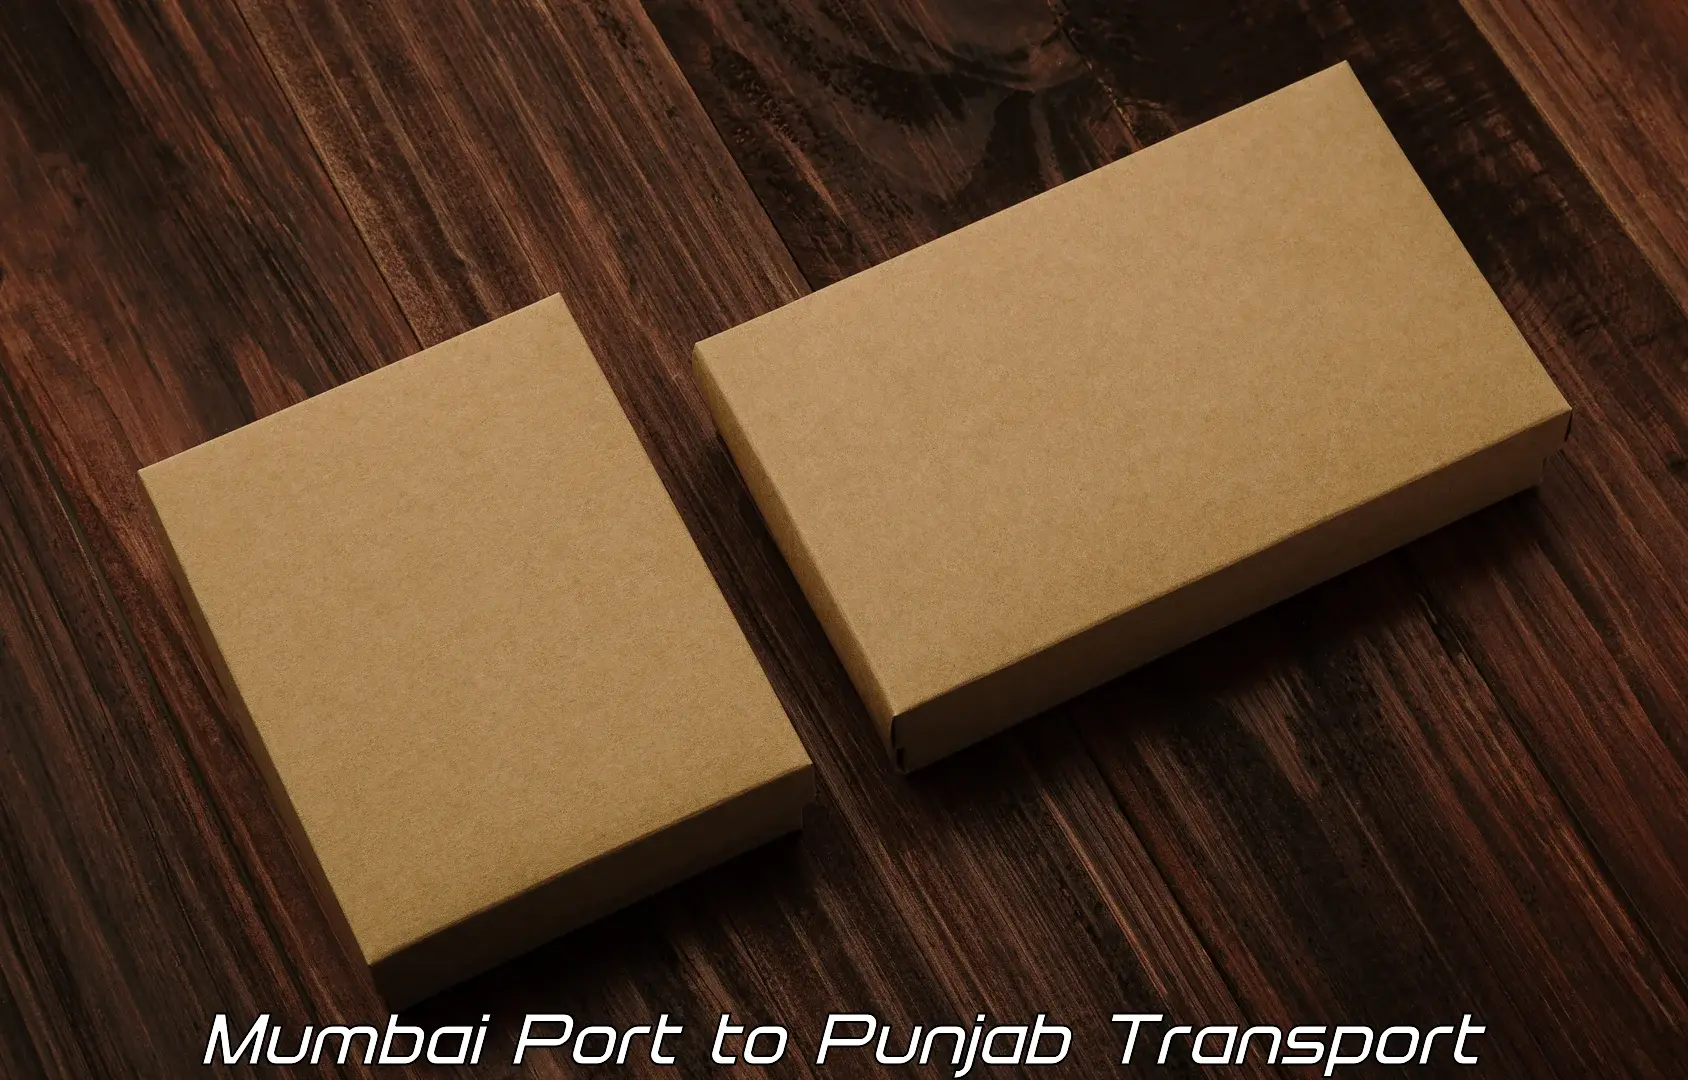 Container transport service Mumbai Port to Patiala